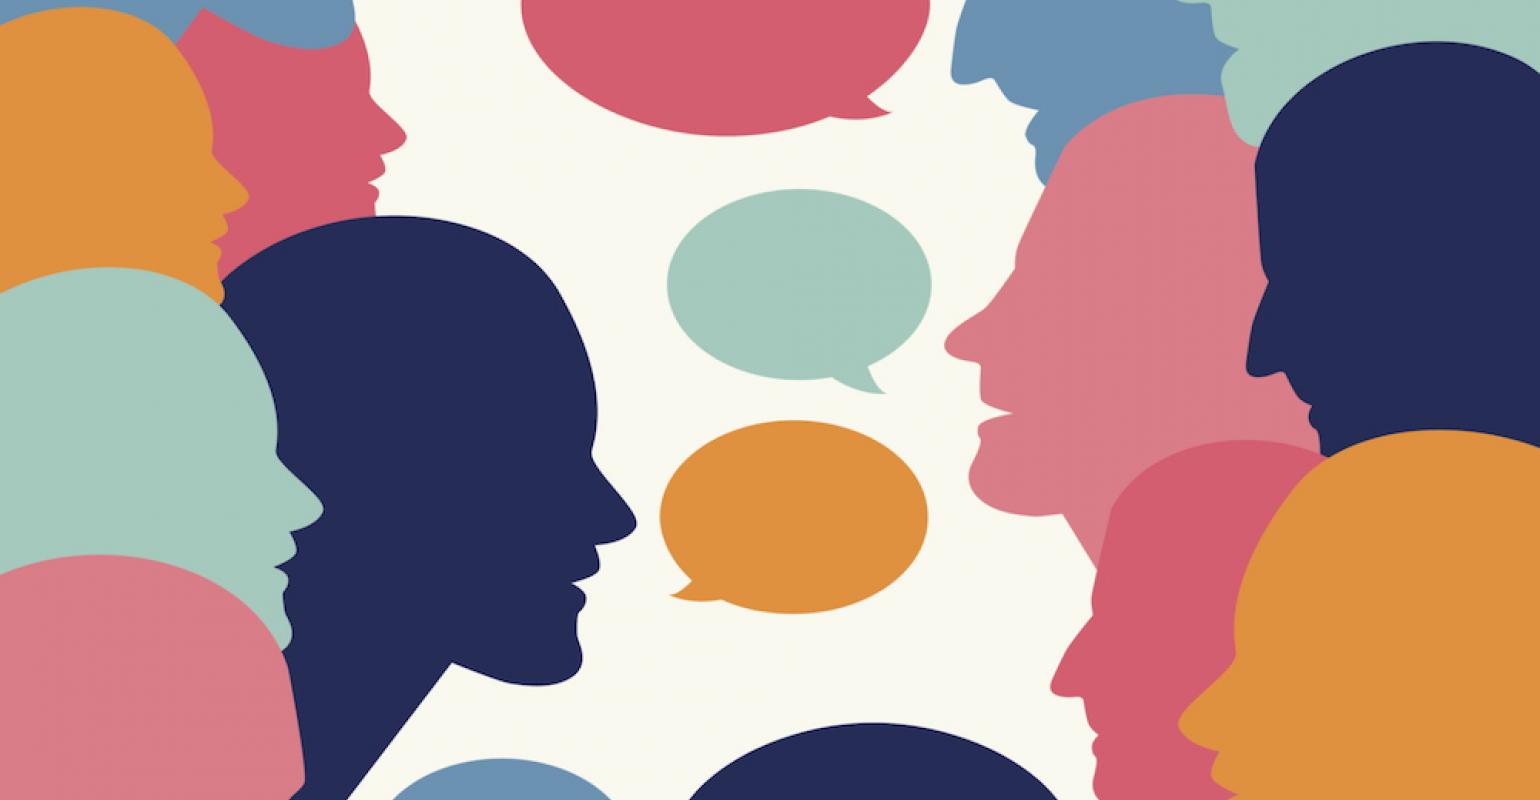 5 Ways to Avoid Cross-Cultural Communication Pitfalls | MeetingsNet